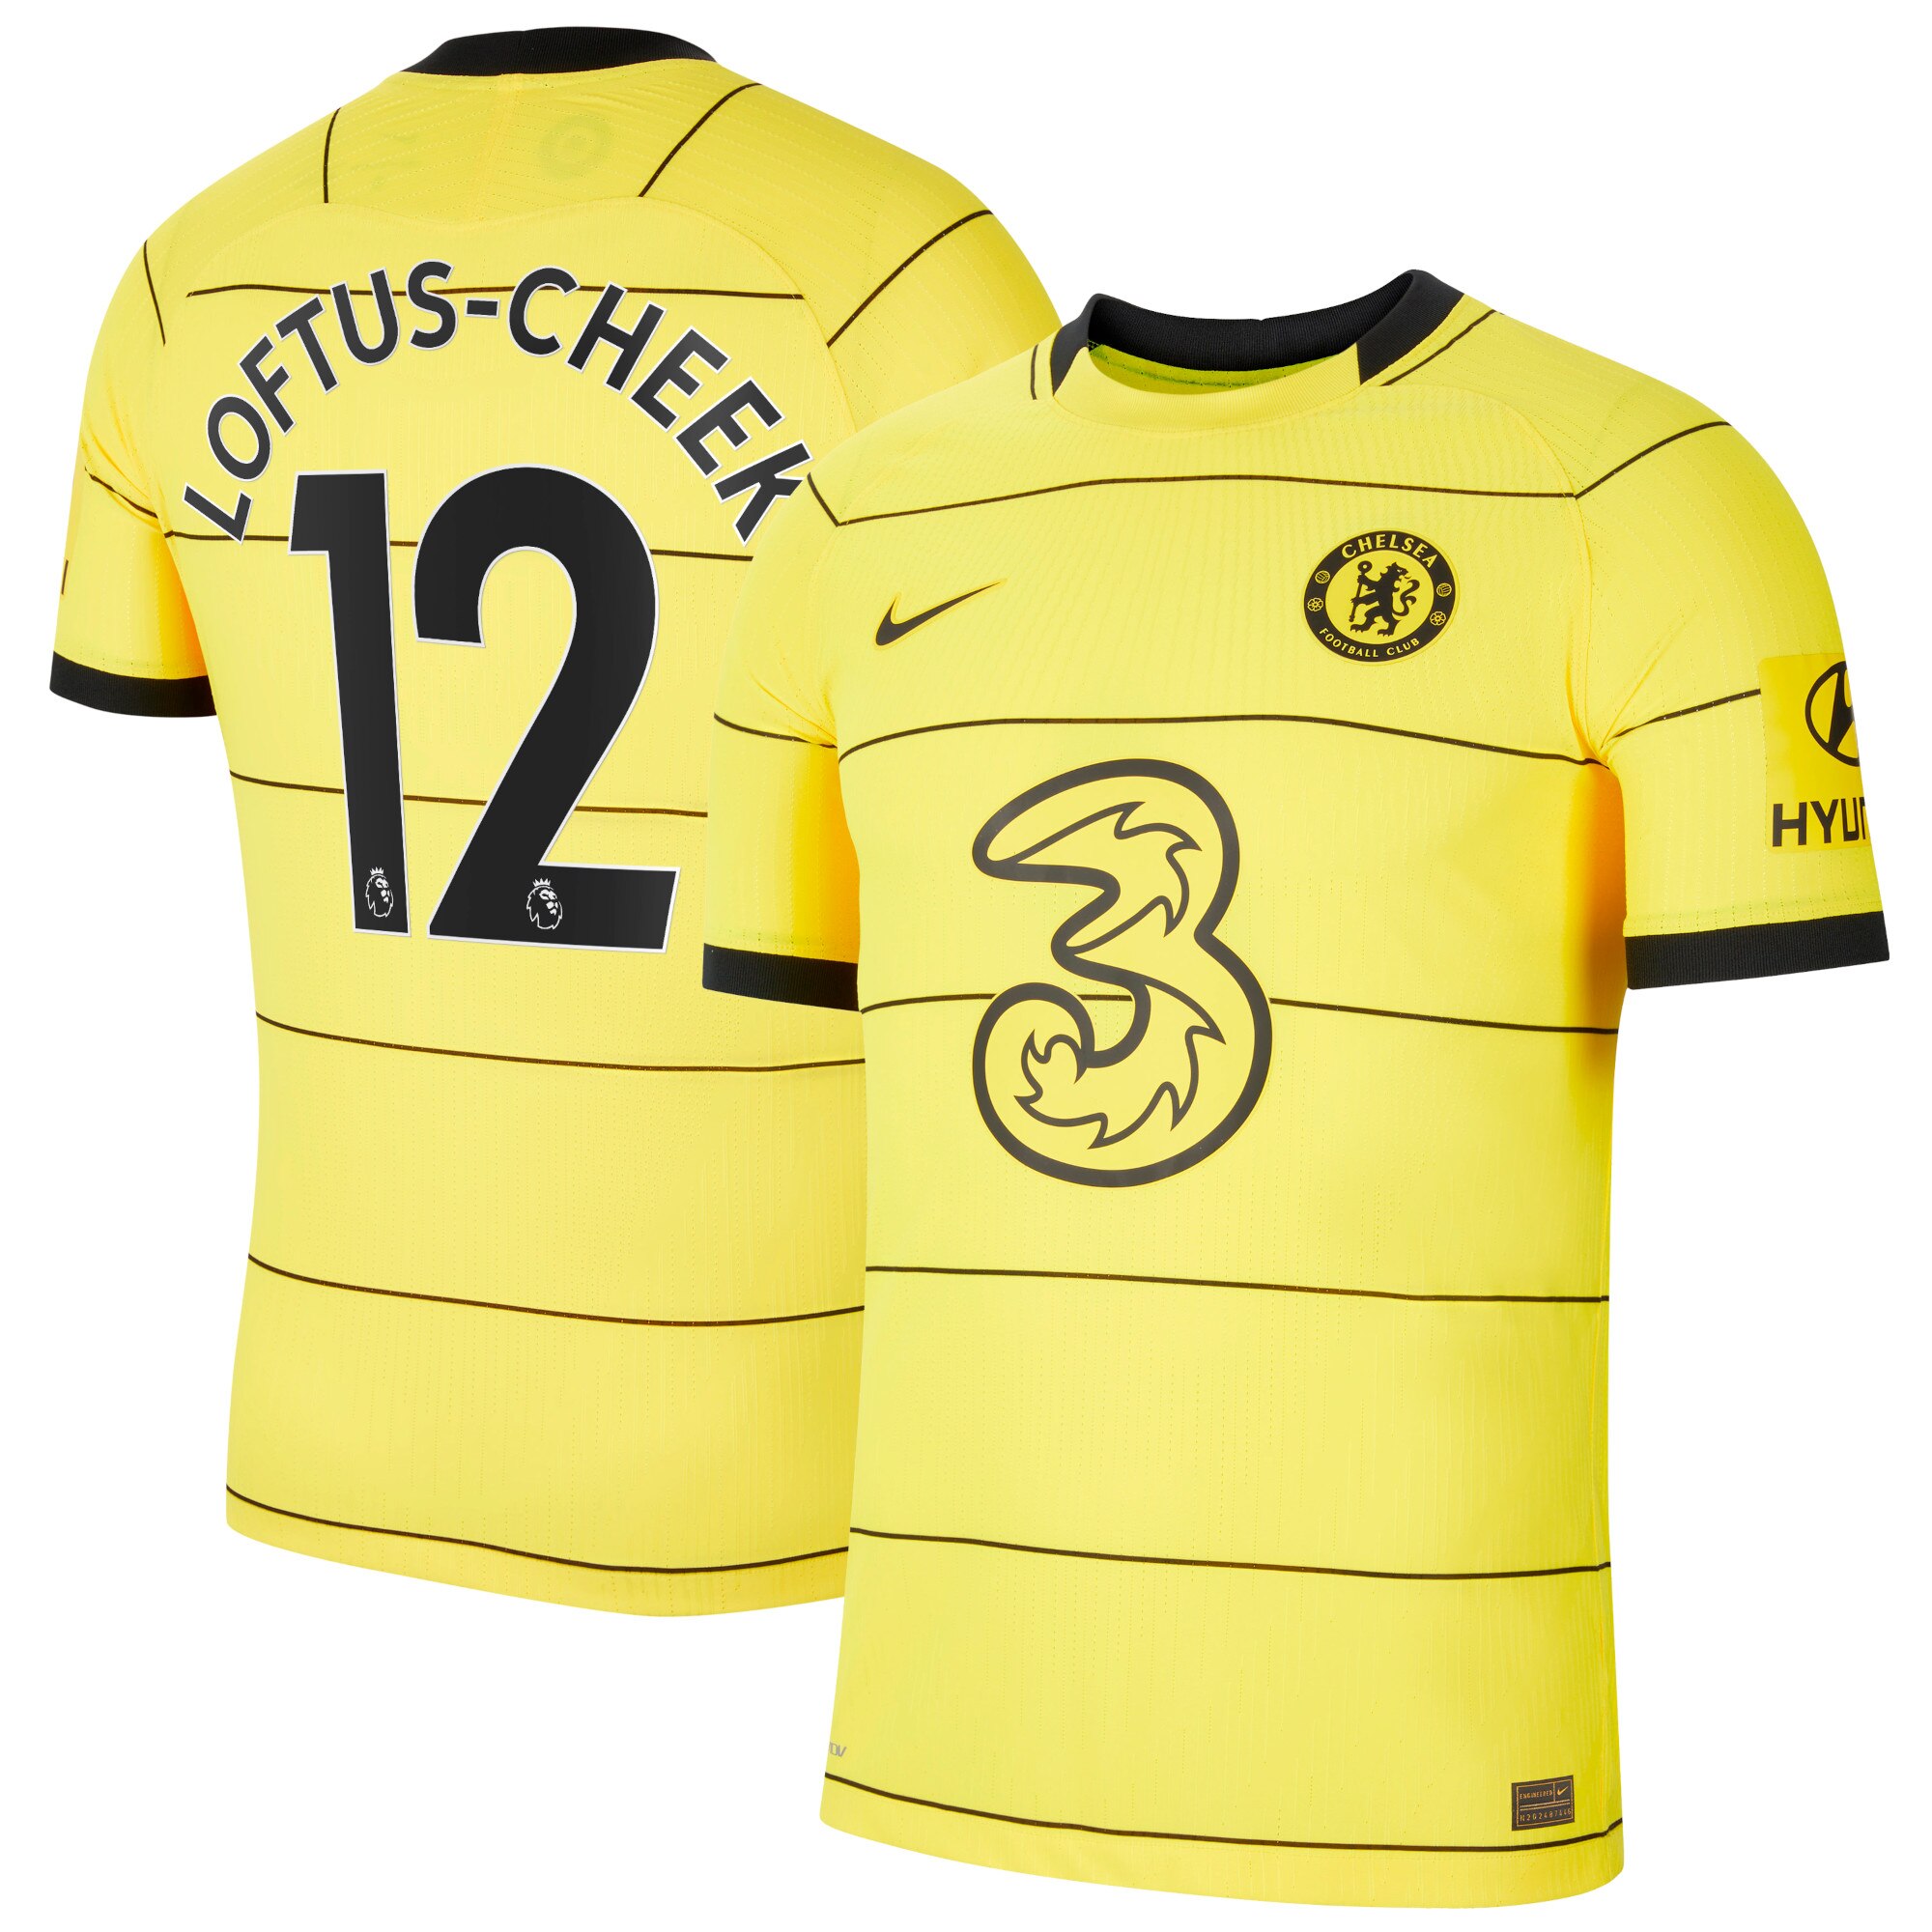 Chelsea Away Vapor Match Shirt 2021-22 with Loftus-Cheek 12 printing